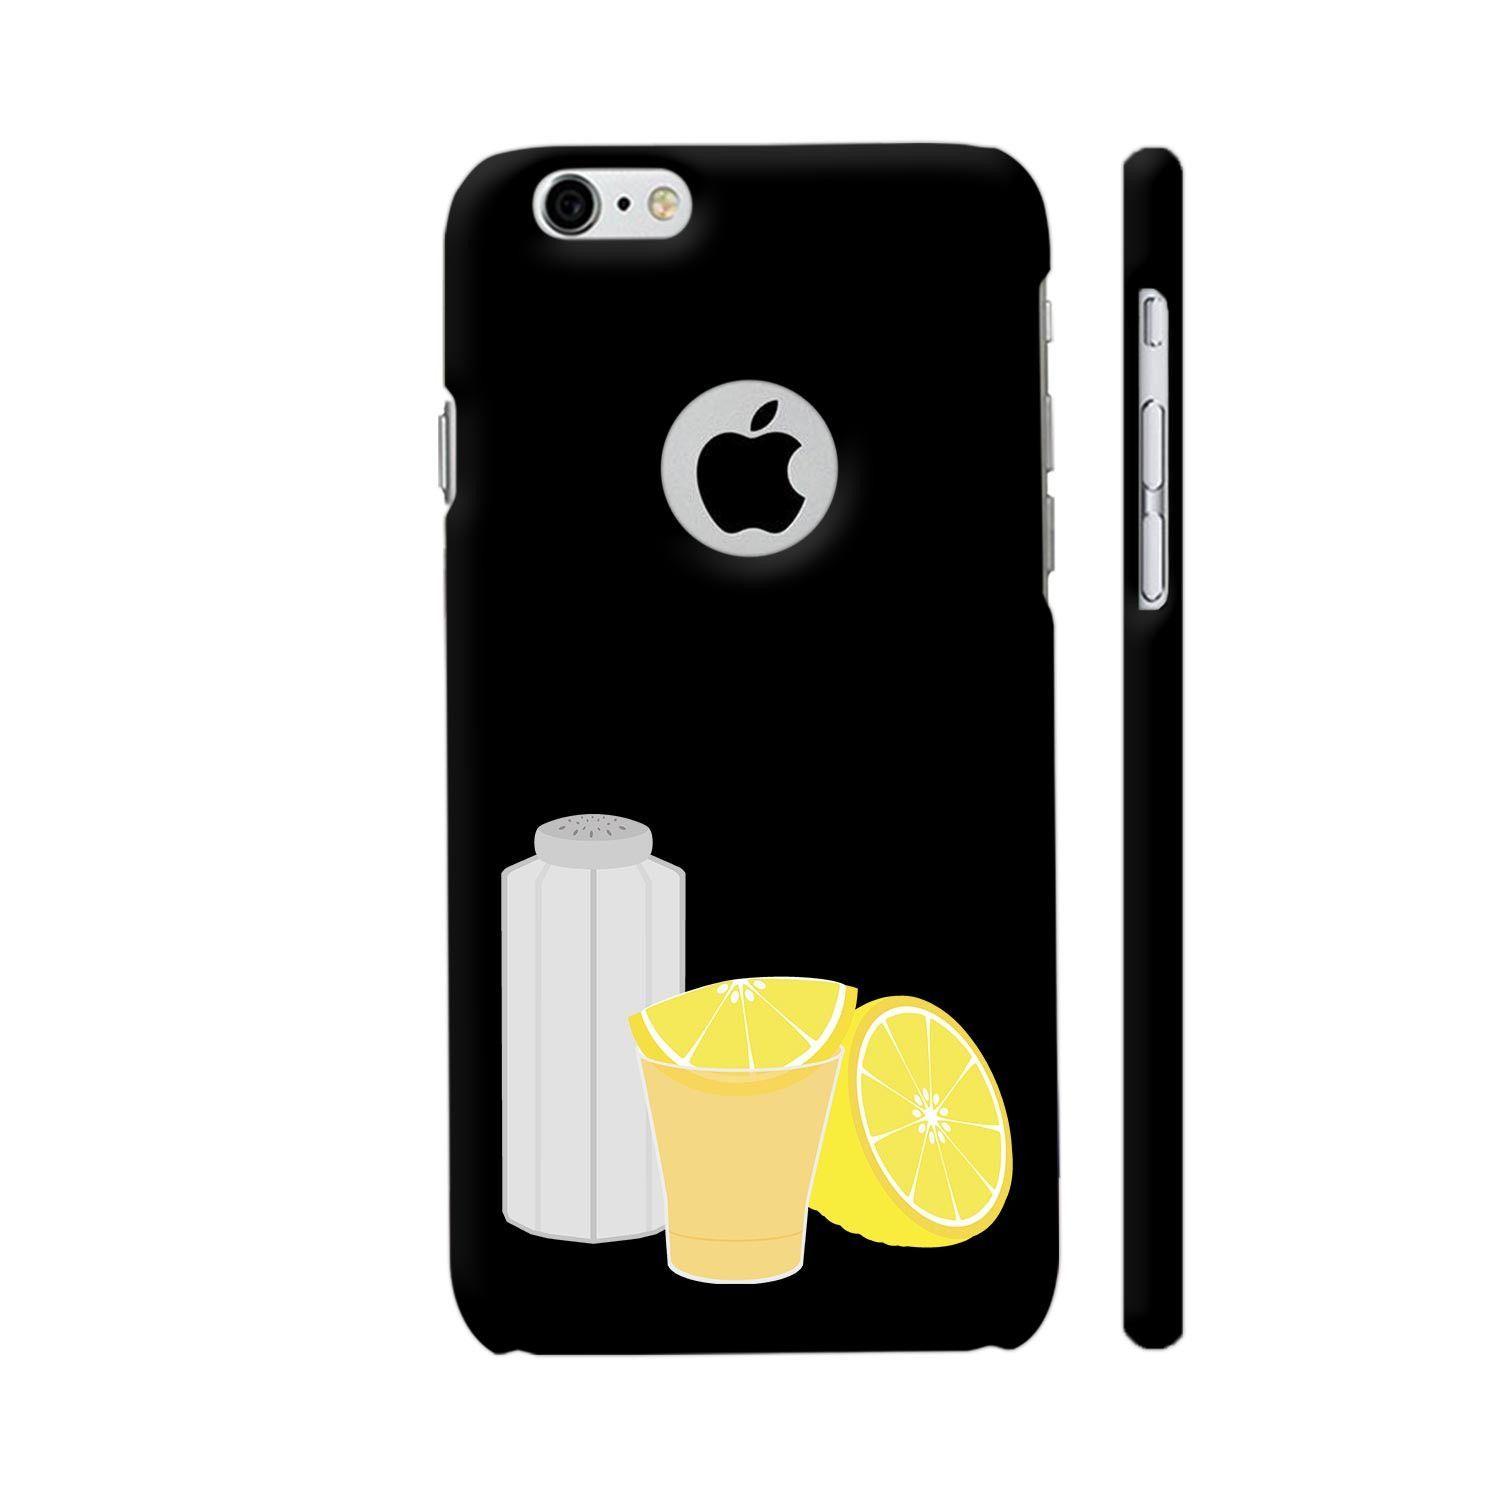 Lemon Phone Logo - Salt Lemon And Tequila iPhone 6 / 6s Logo Cut Cover. Artist: Torben